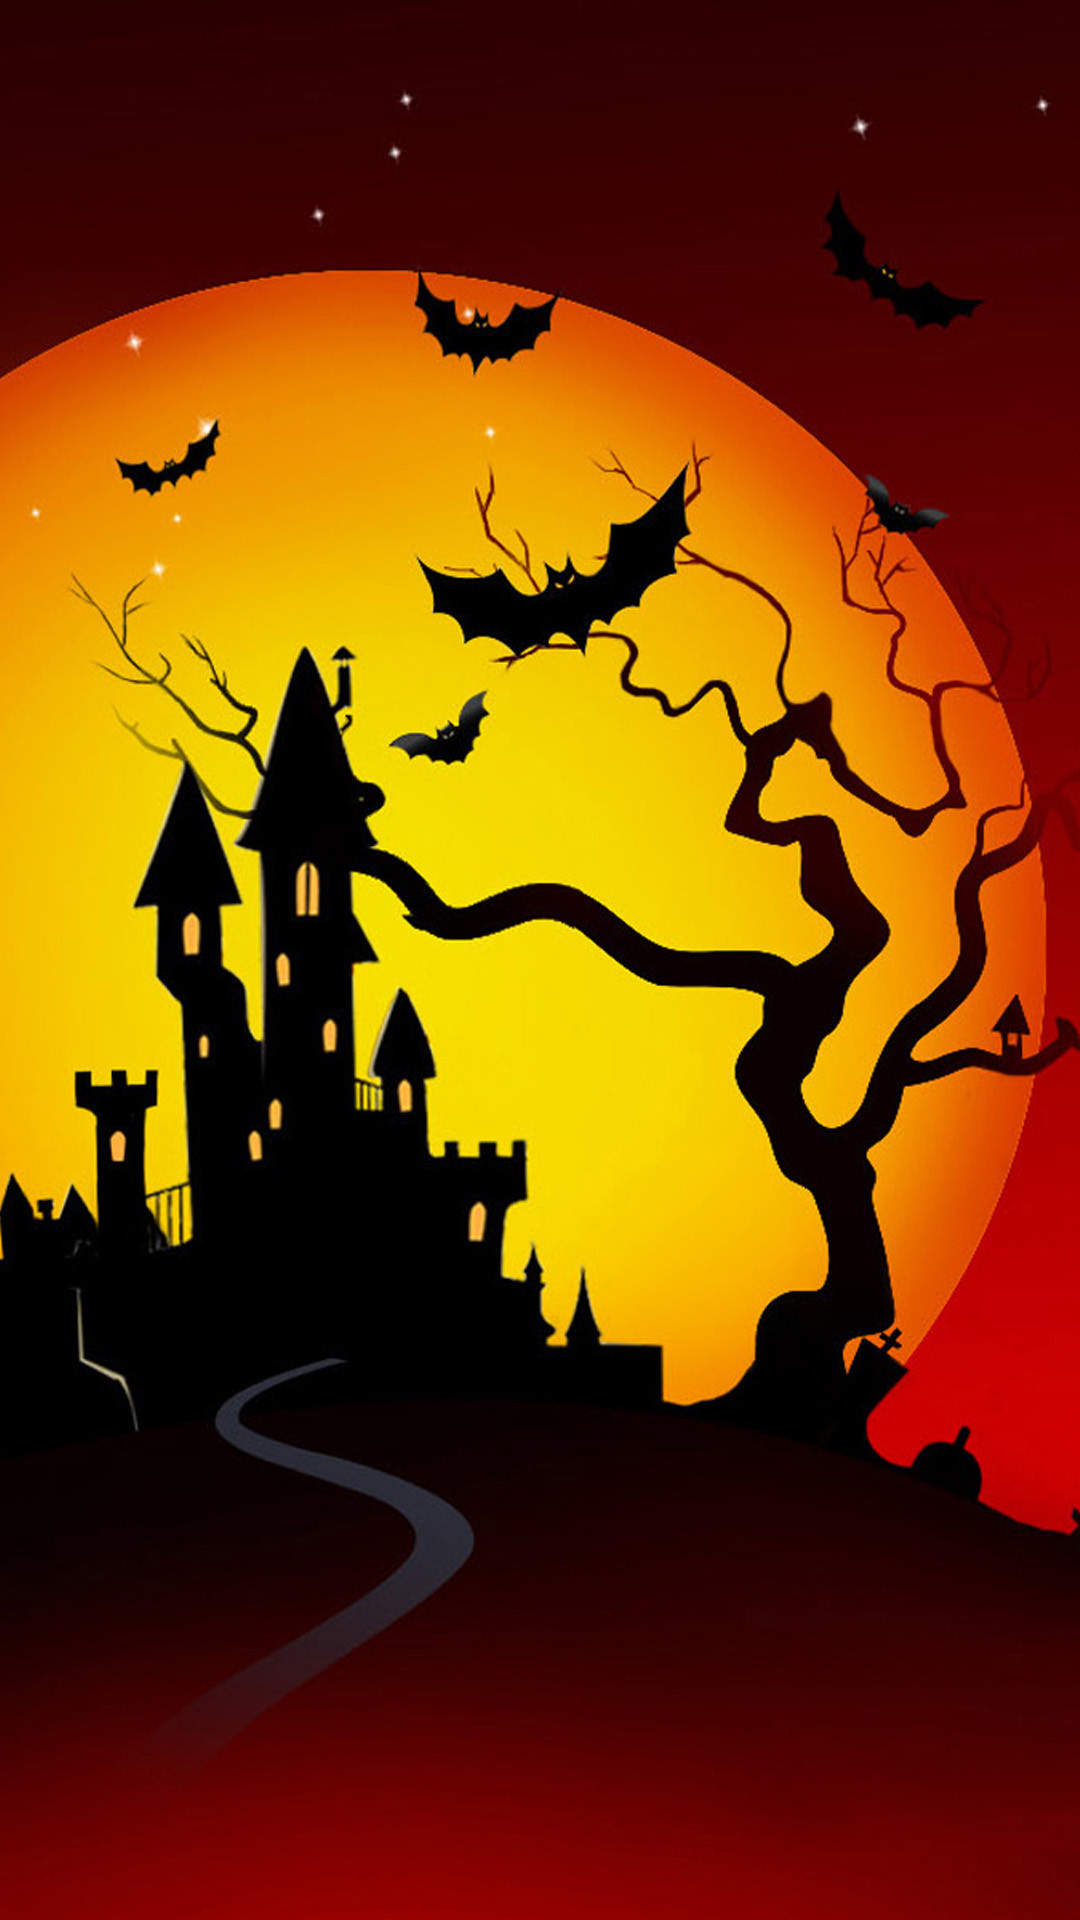 1080x1920 Free^ Happy Halloween Wallpaper 2017 for iPhone & Android Download ... Free  Happy Halloween Wallpaper 2017 For IPhone Android Download